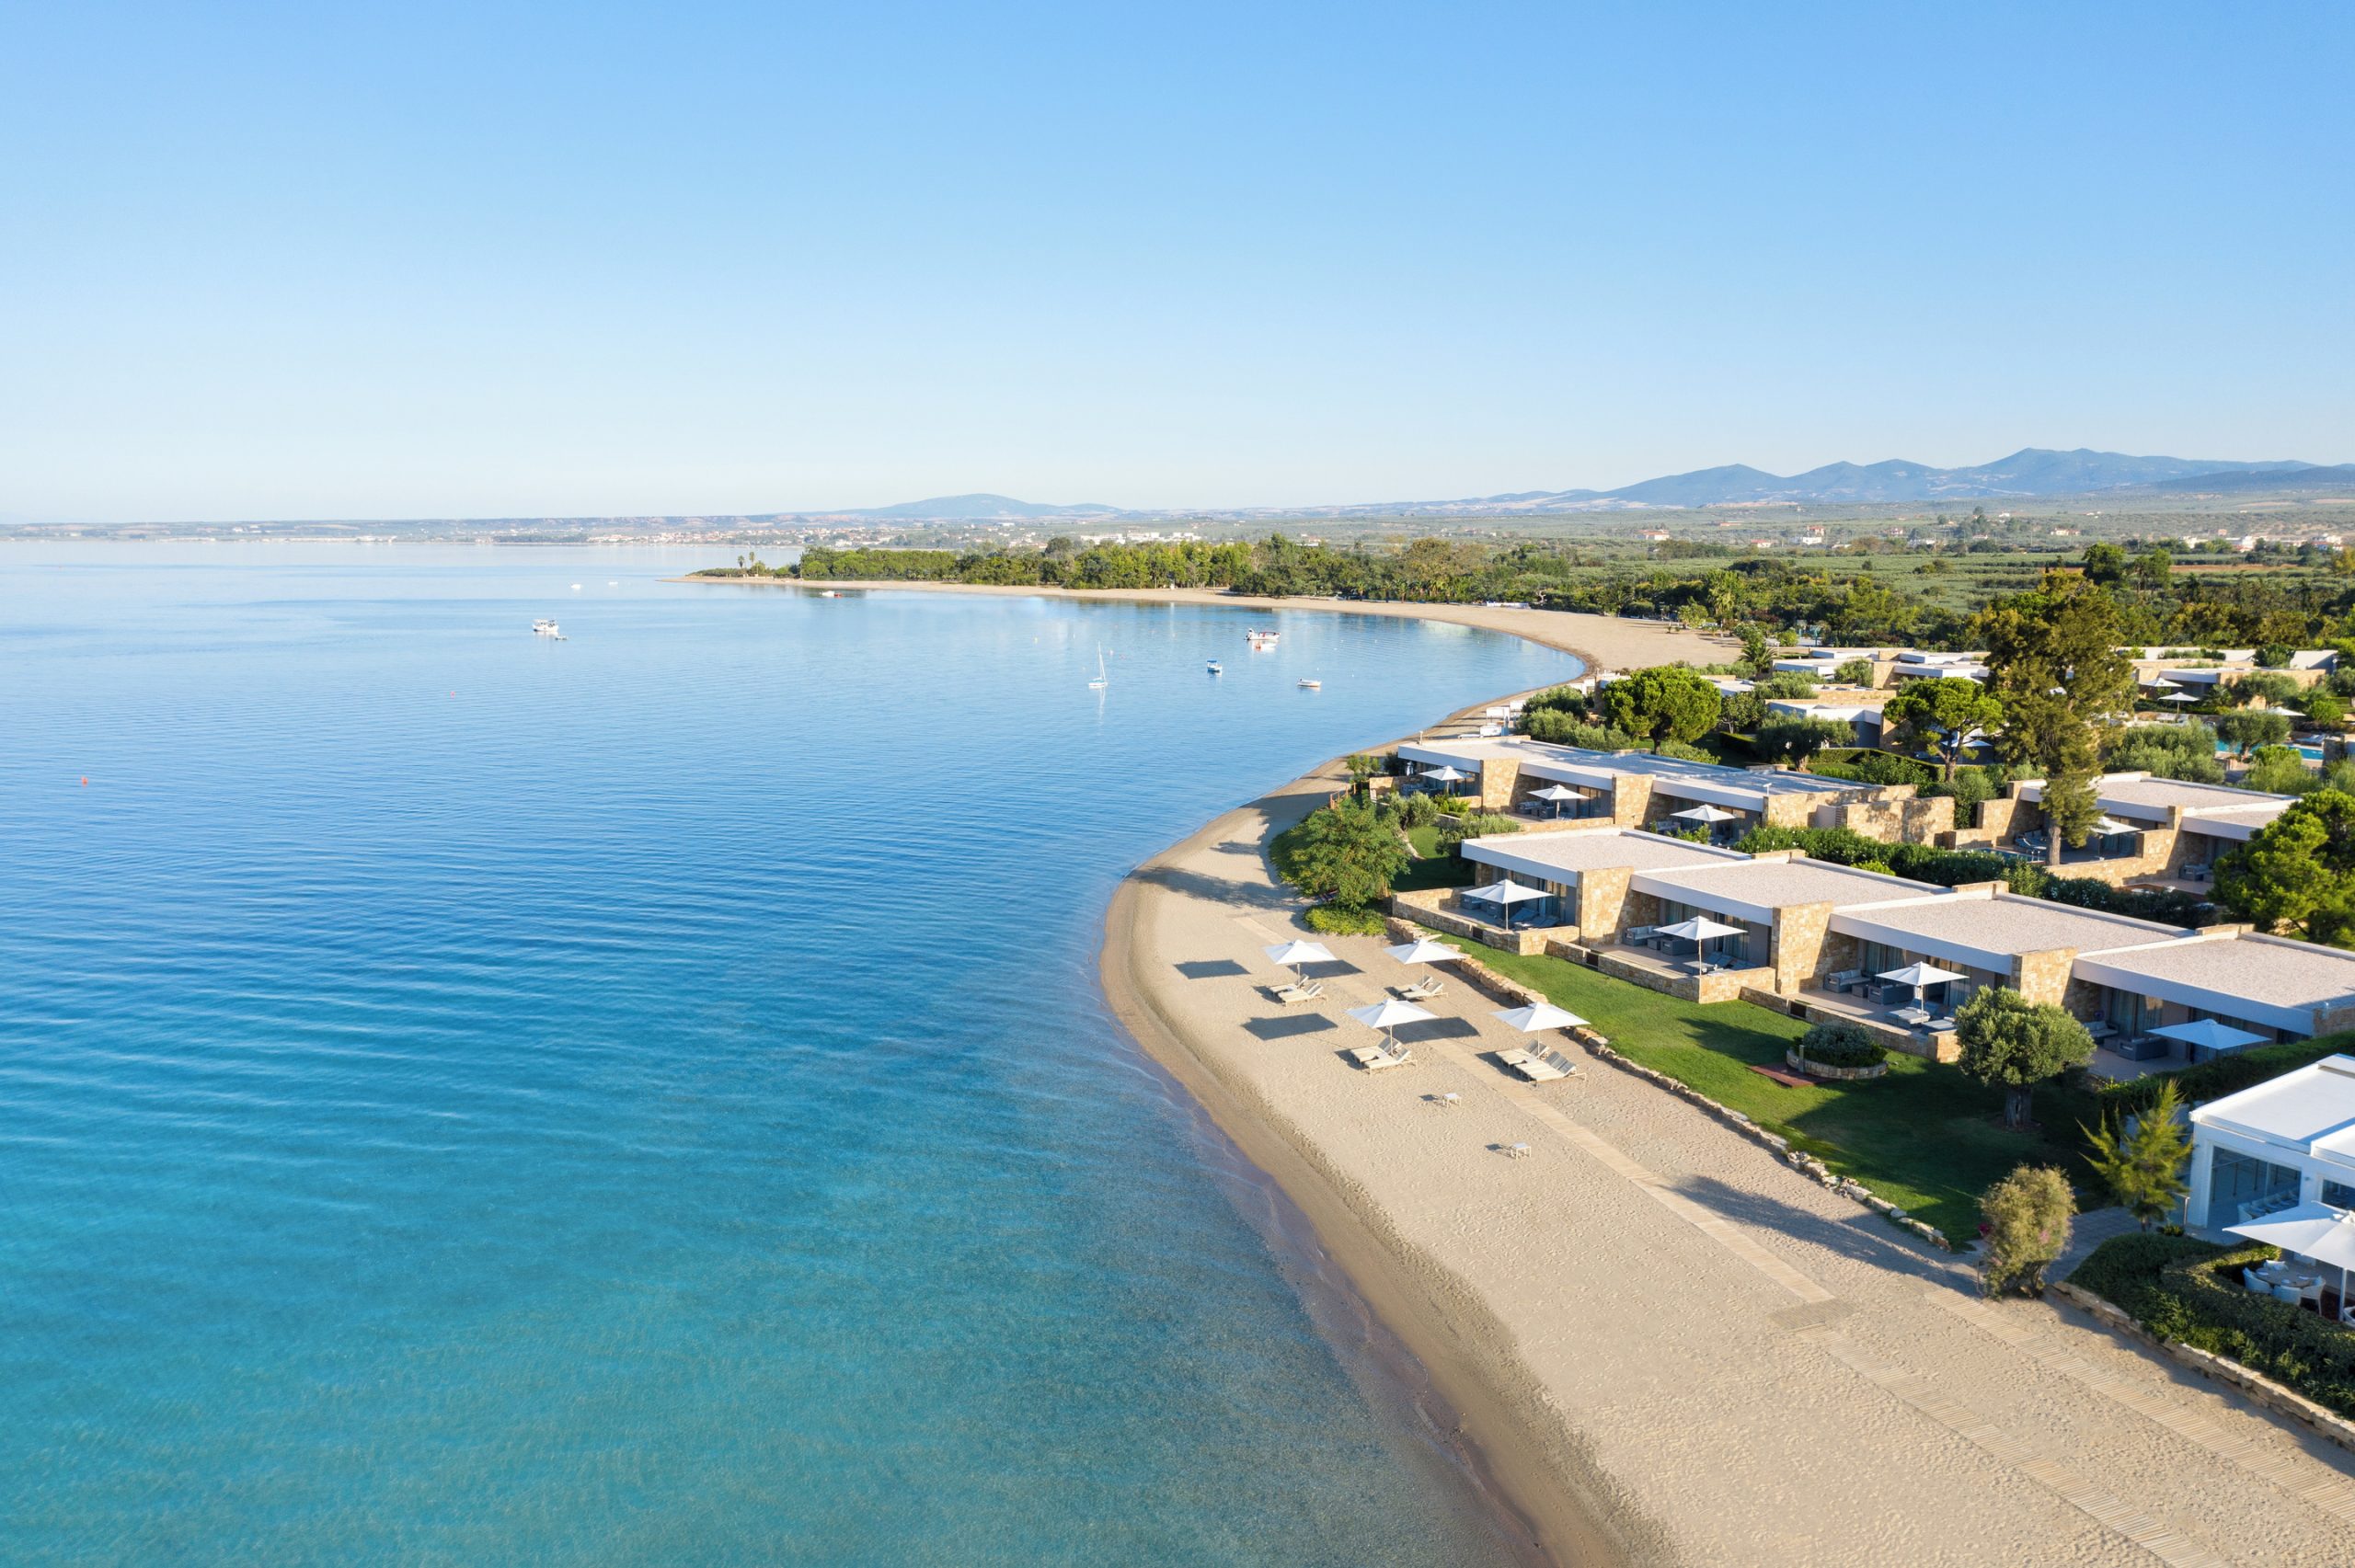 Sani/Ikos – Απόβαση στην Κρήτη με επένδυση 125 εκατ. ευρώ [φωτογραφίες]